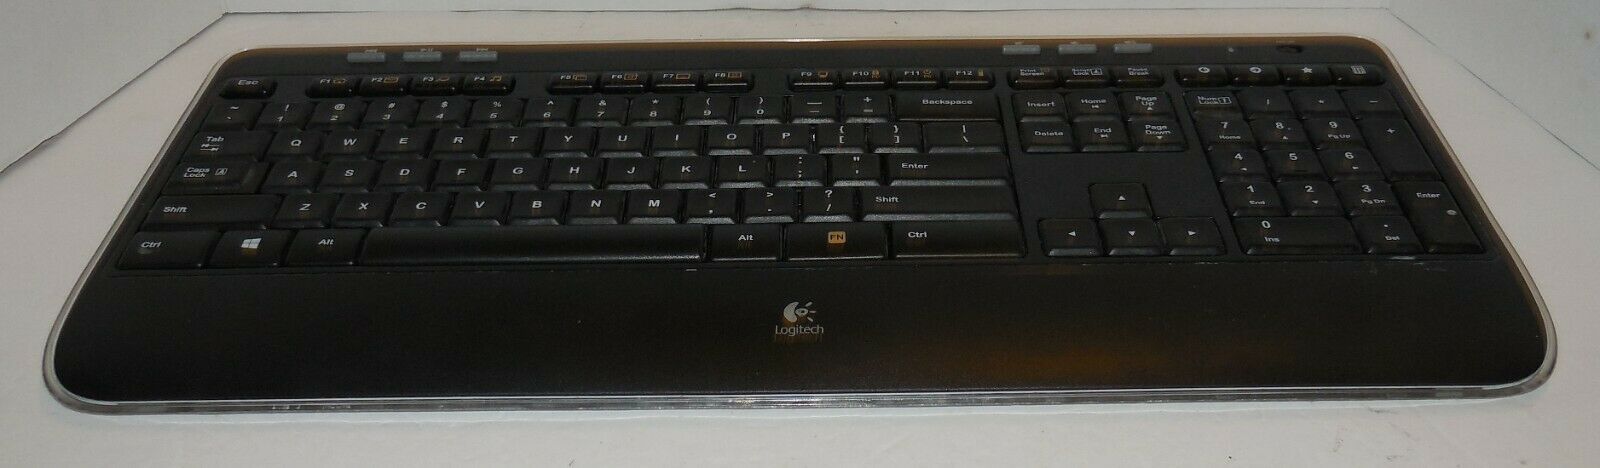 Ubetydelig ros Overskyet Logitech K520 Wireless Keyboard NO Unifying and 50 similar items